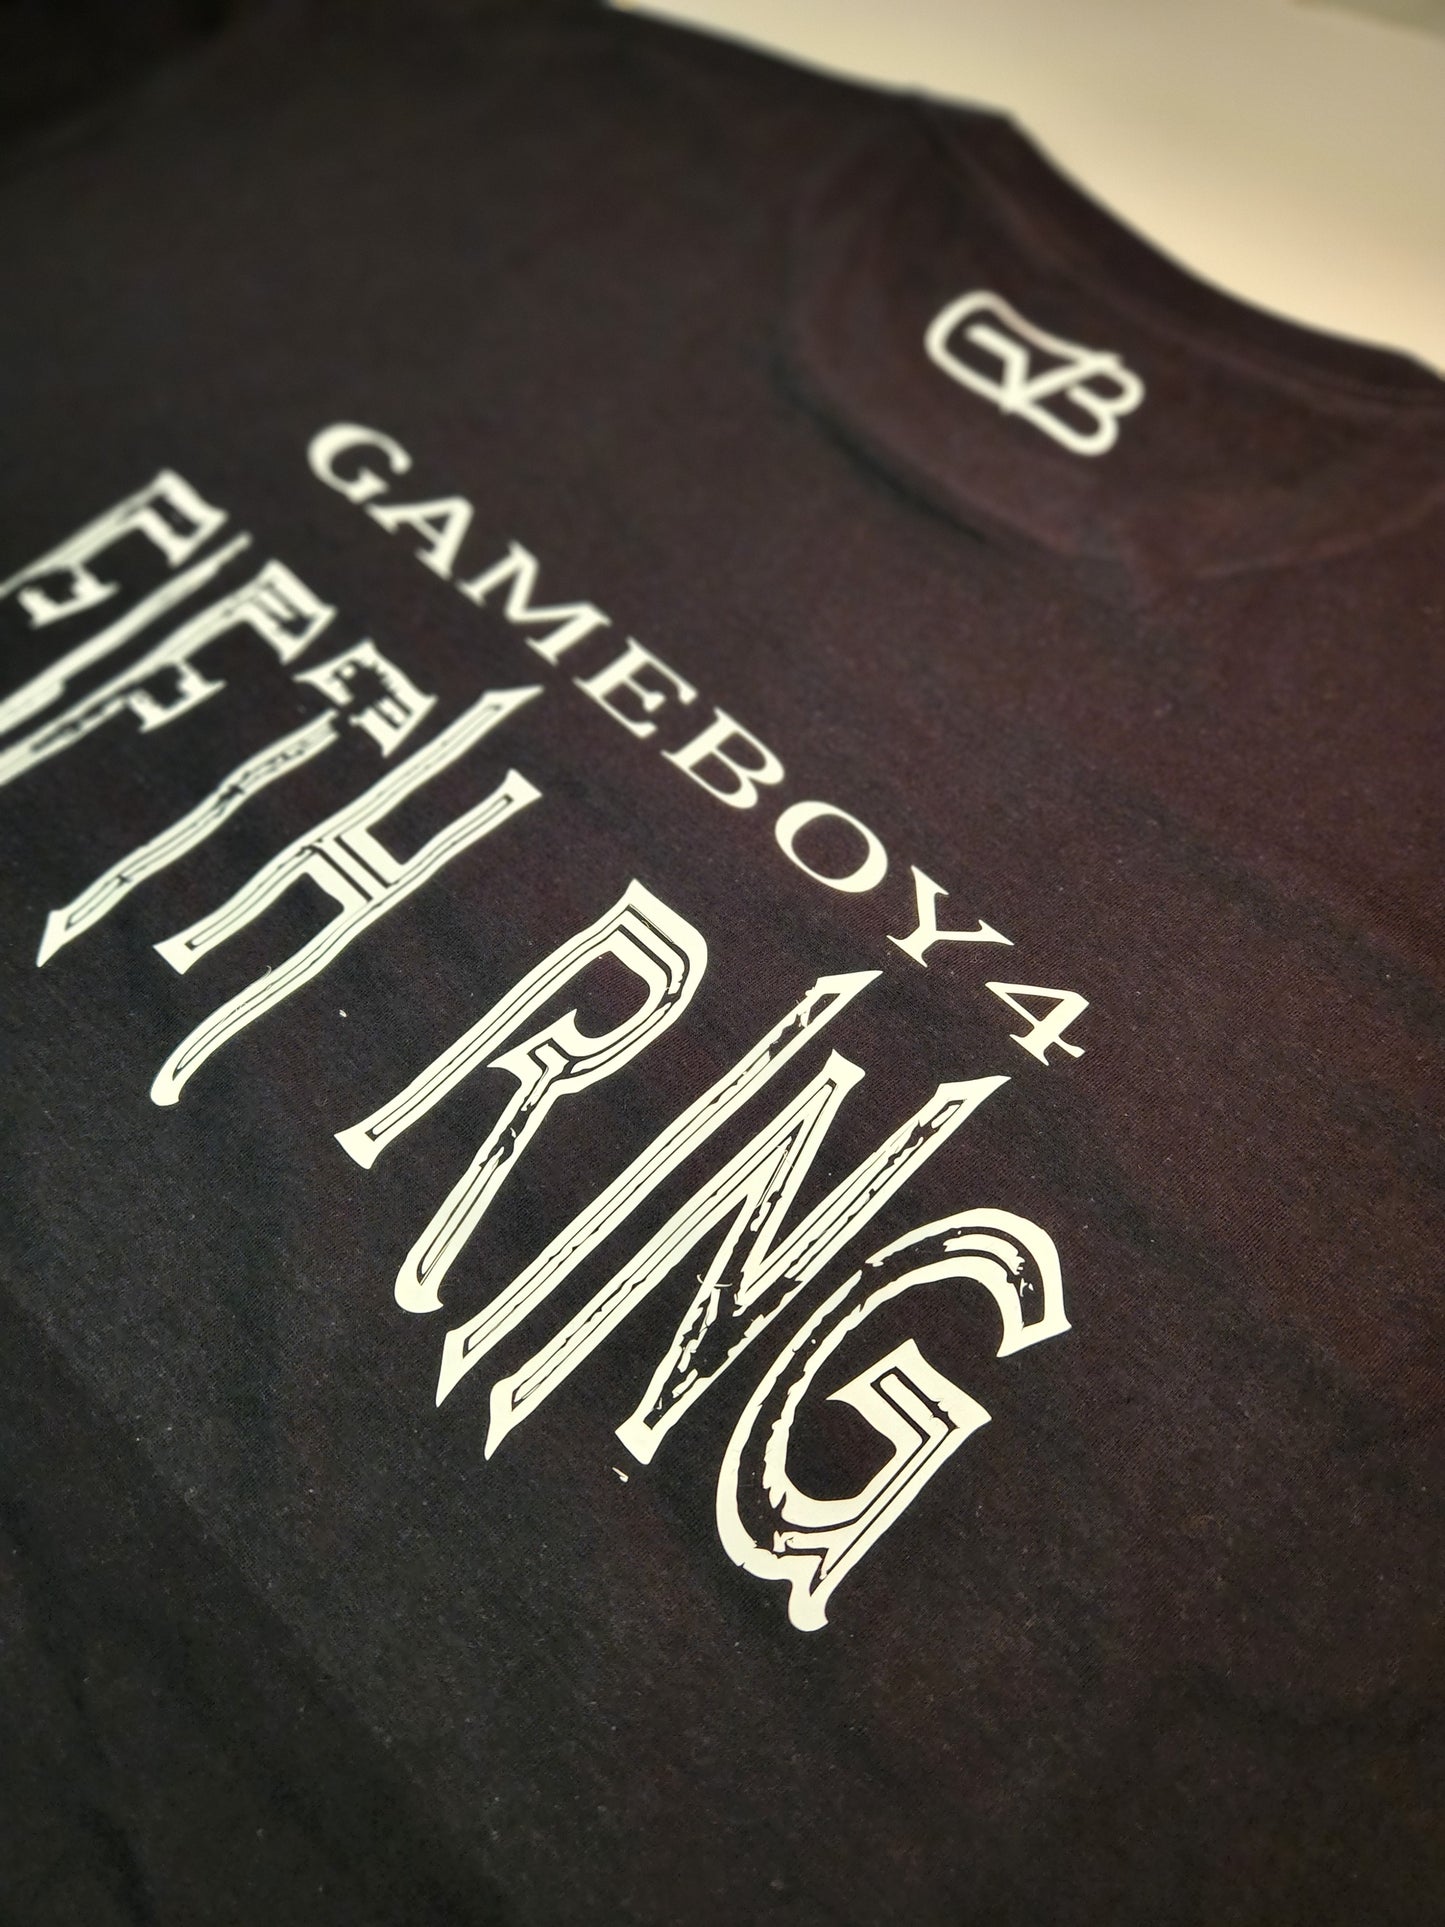 GameBoy4 FIFTH RING Album Tee*